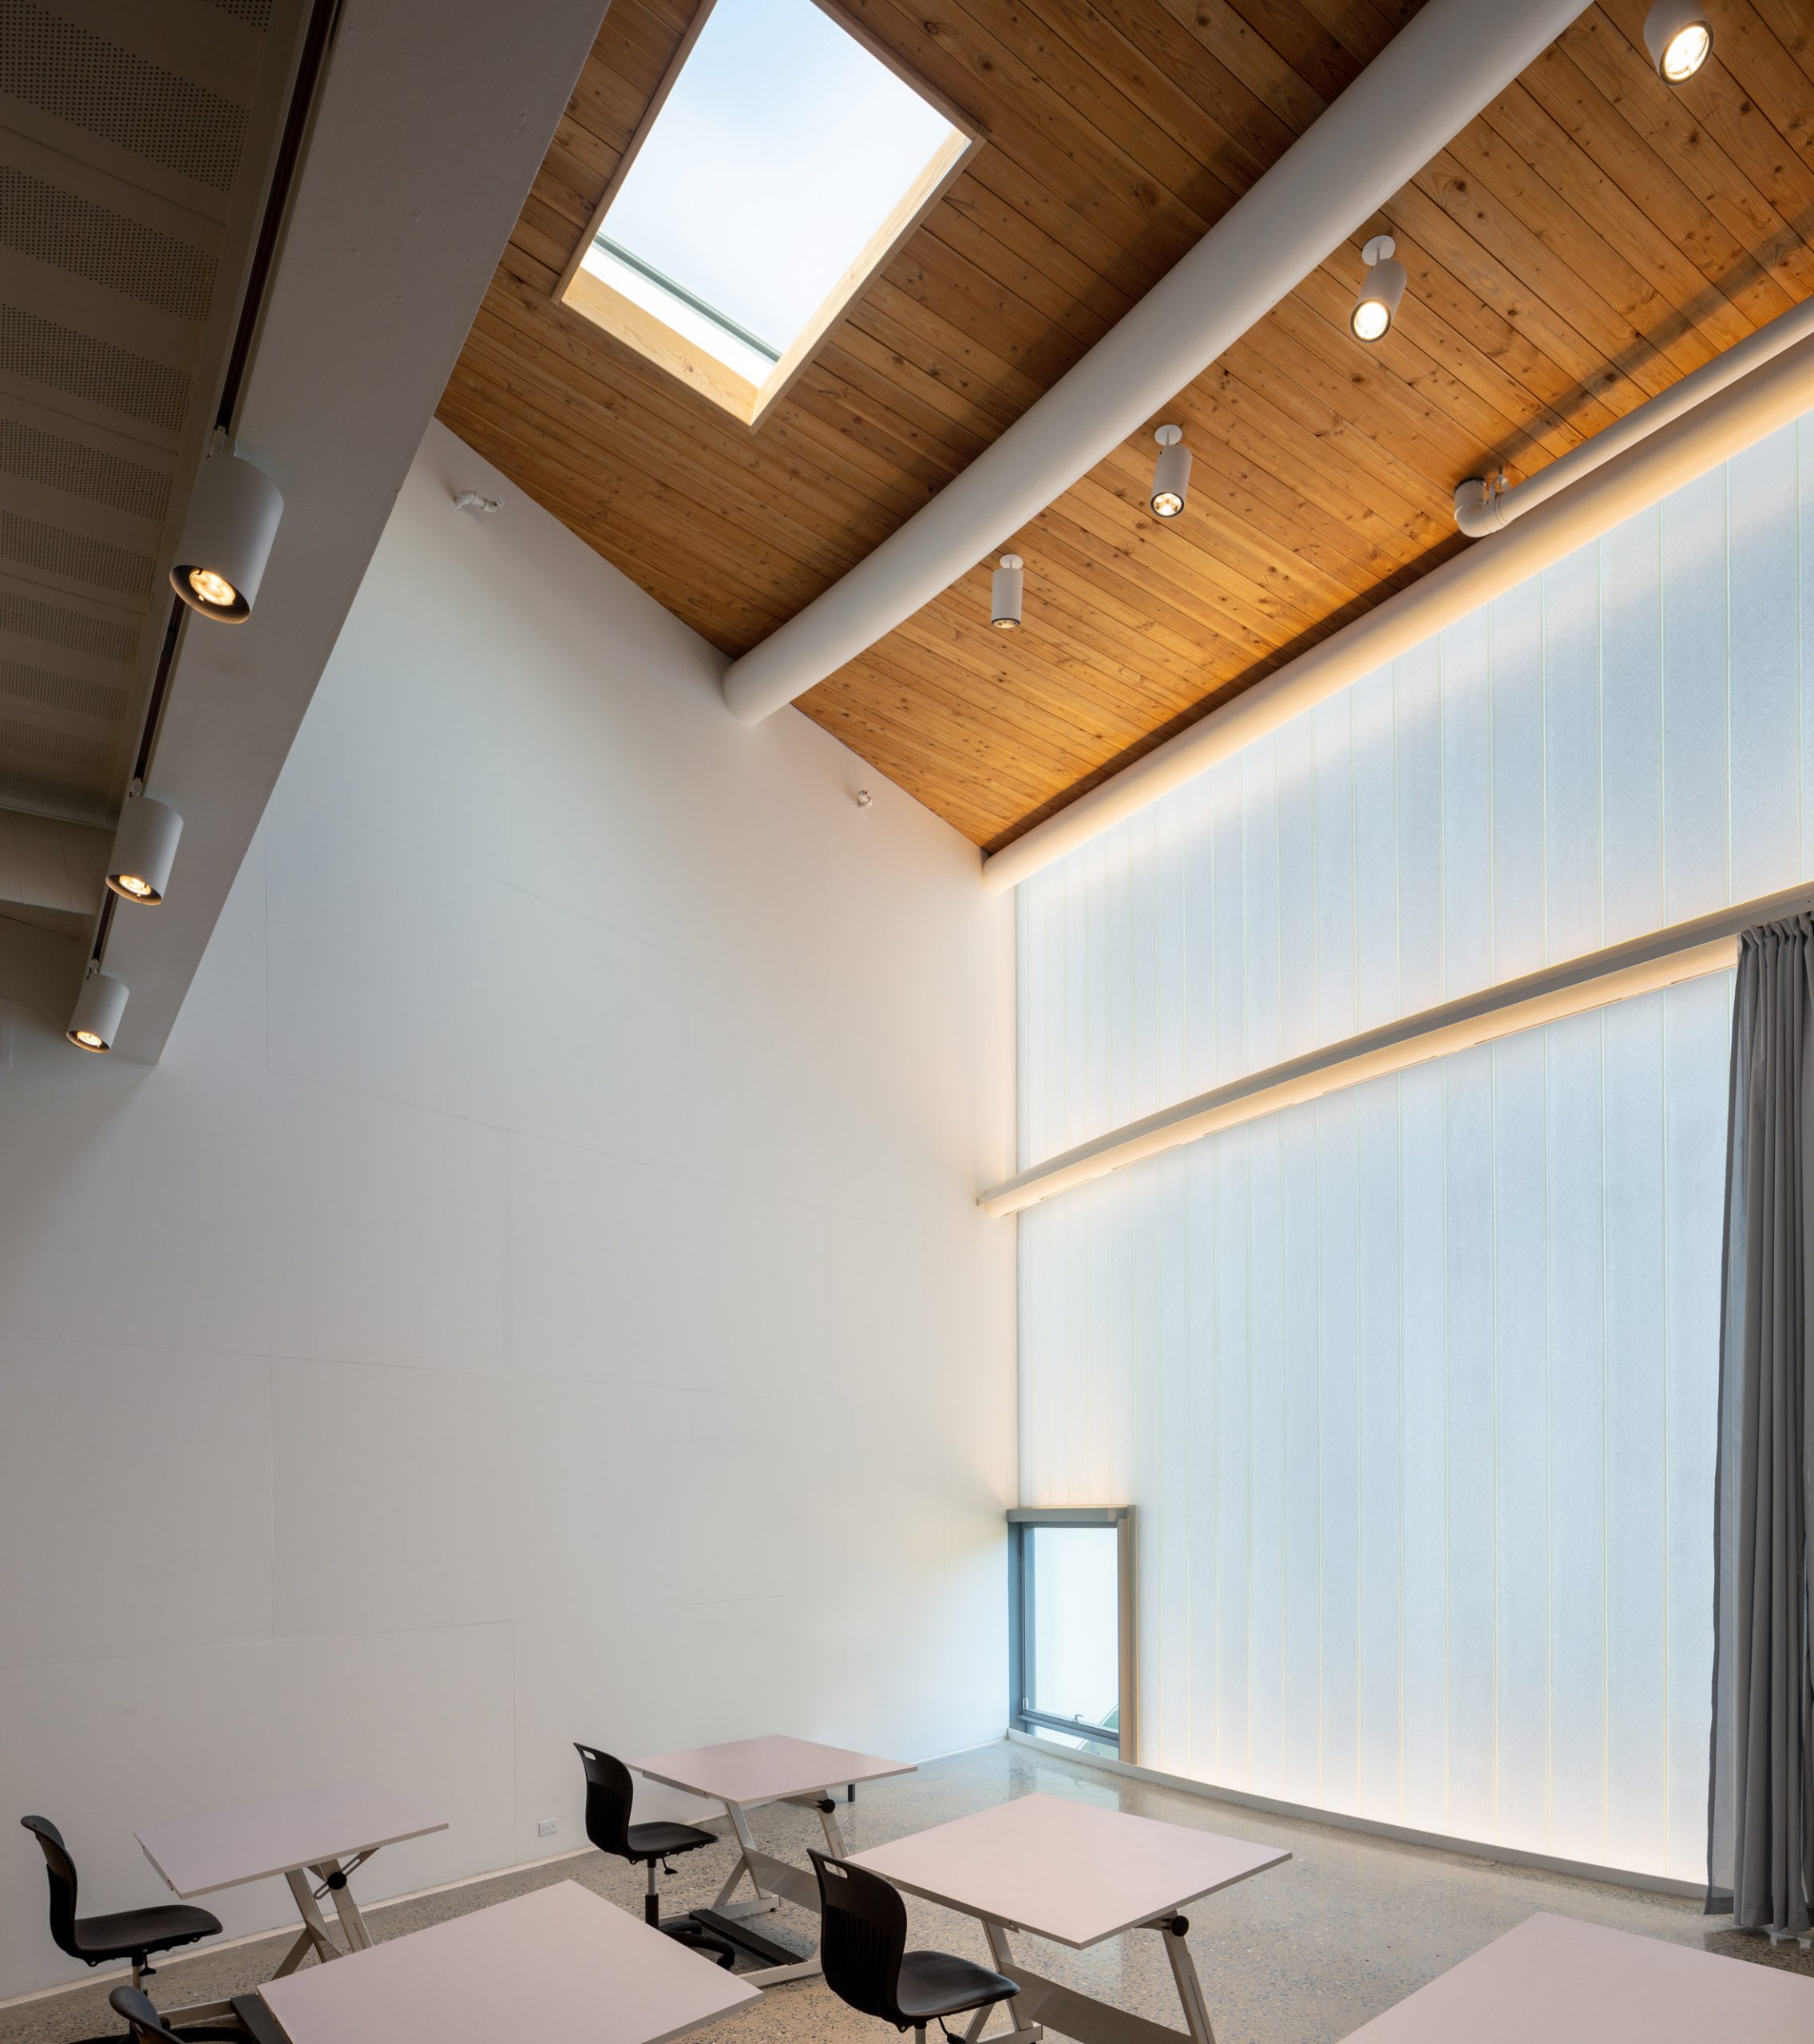 Studio inside Winter Visual Arts Building by Steven Holl Architects in Lancaster, Pennsylvania